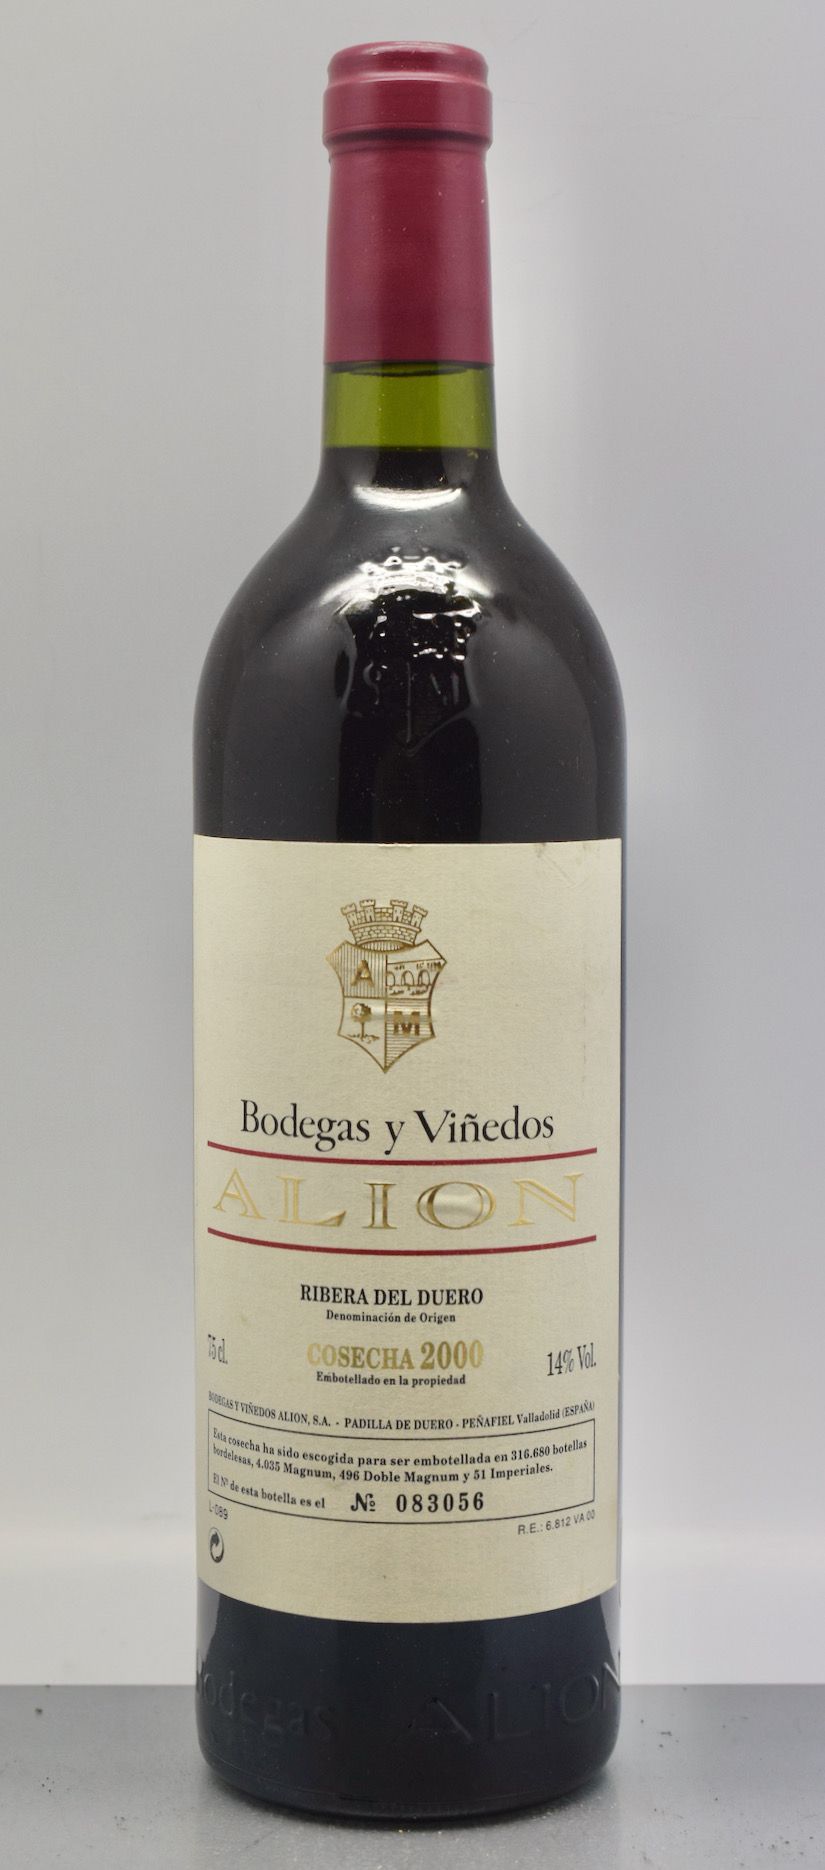 Null 1瓶RIBERA DEL DUERO "Alion" Bodegas y Viñedos 2000